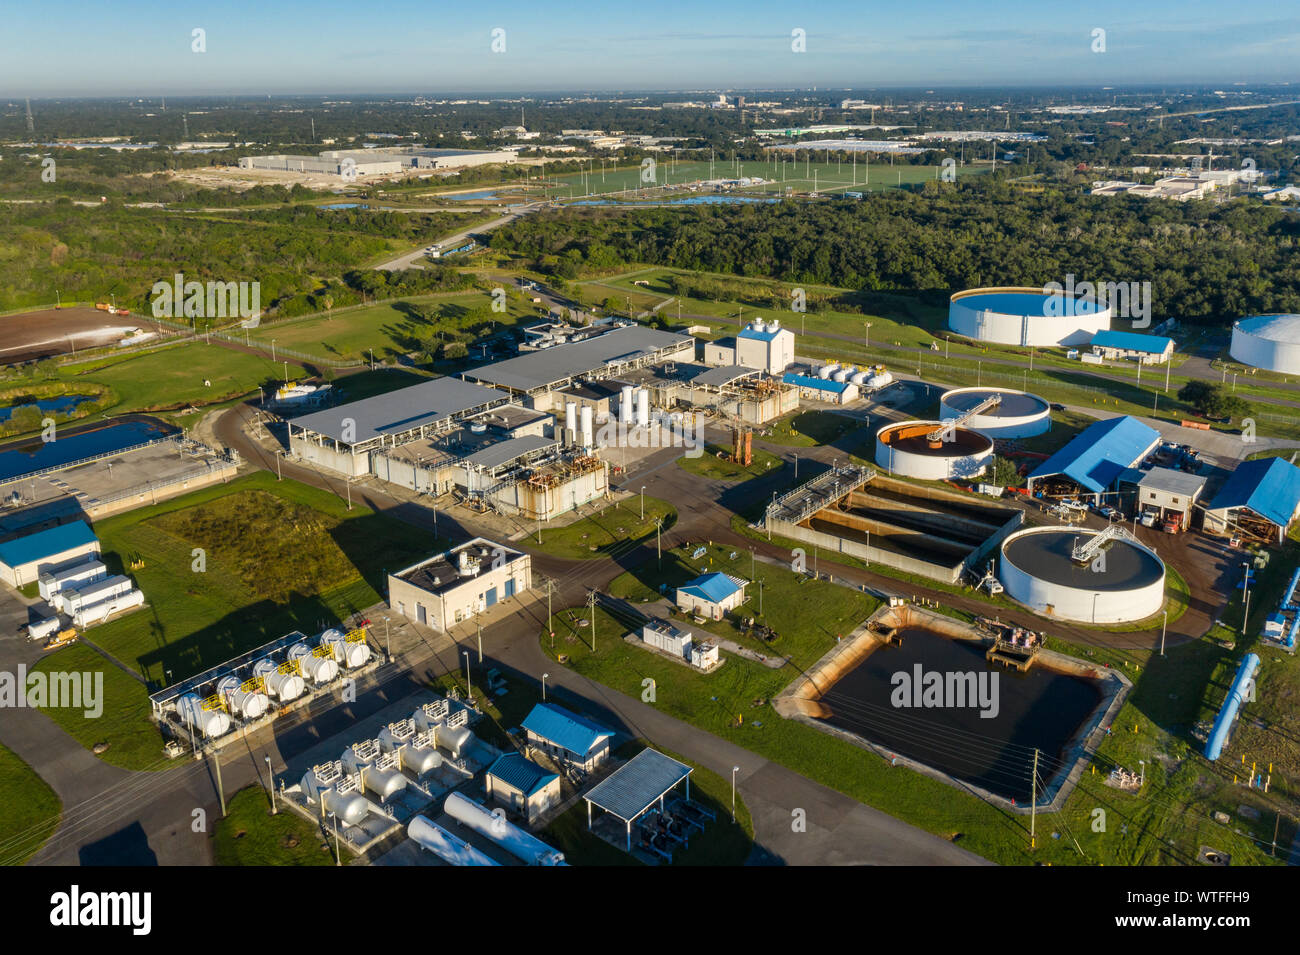 Luftaufnahme der Tampa Bay Regional Surface Water Treatment Plant in Tampa, Florida. Stockfoto